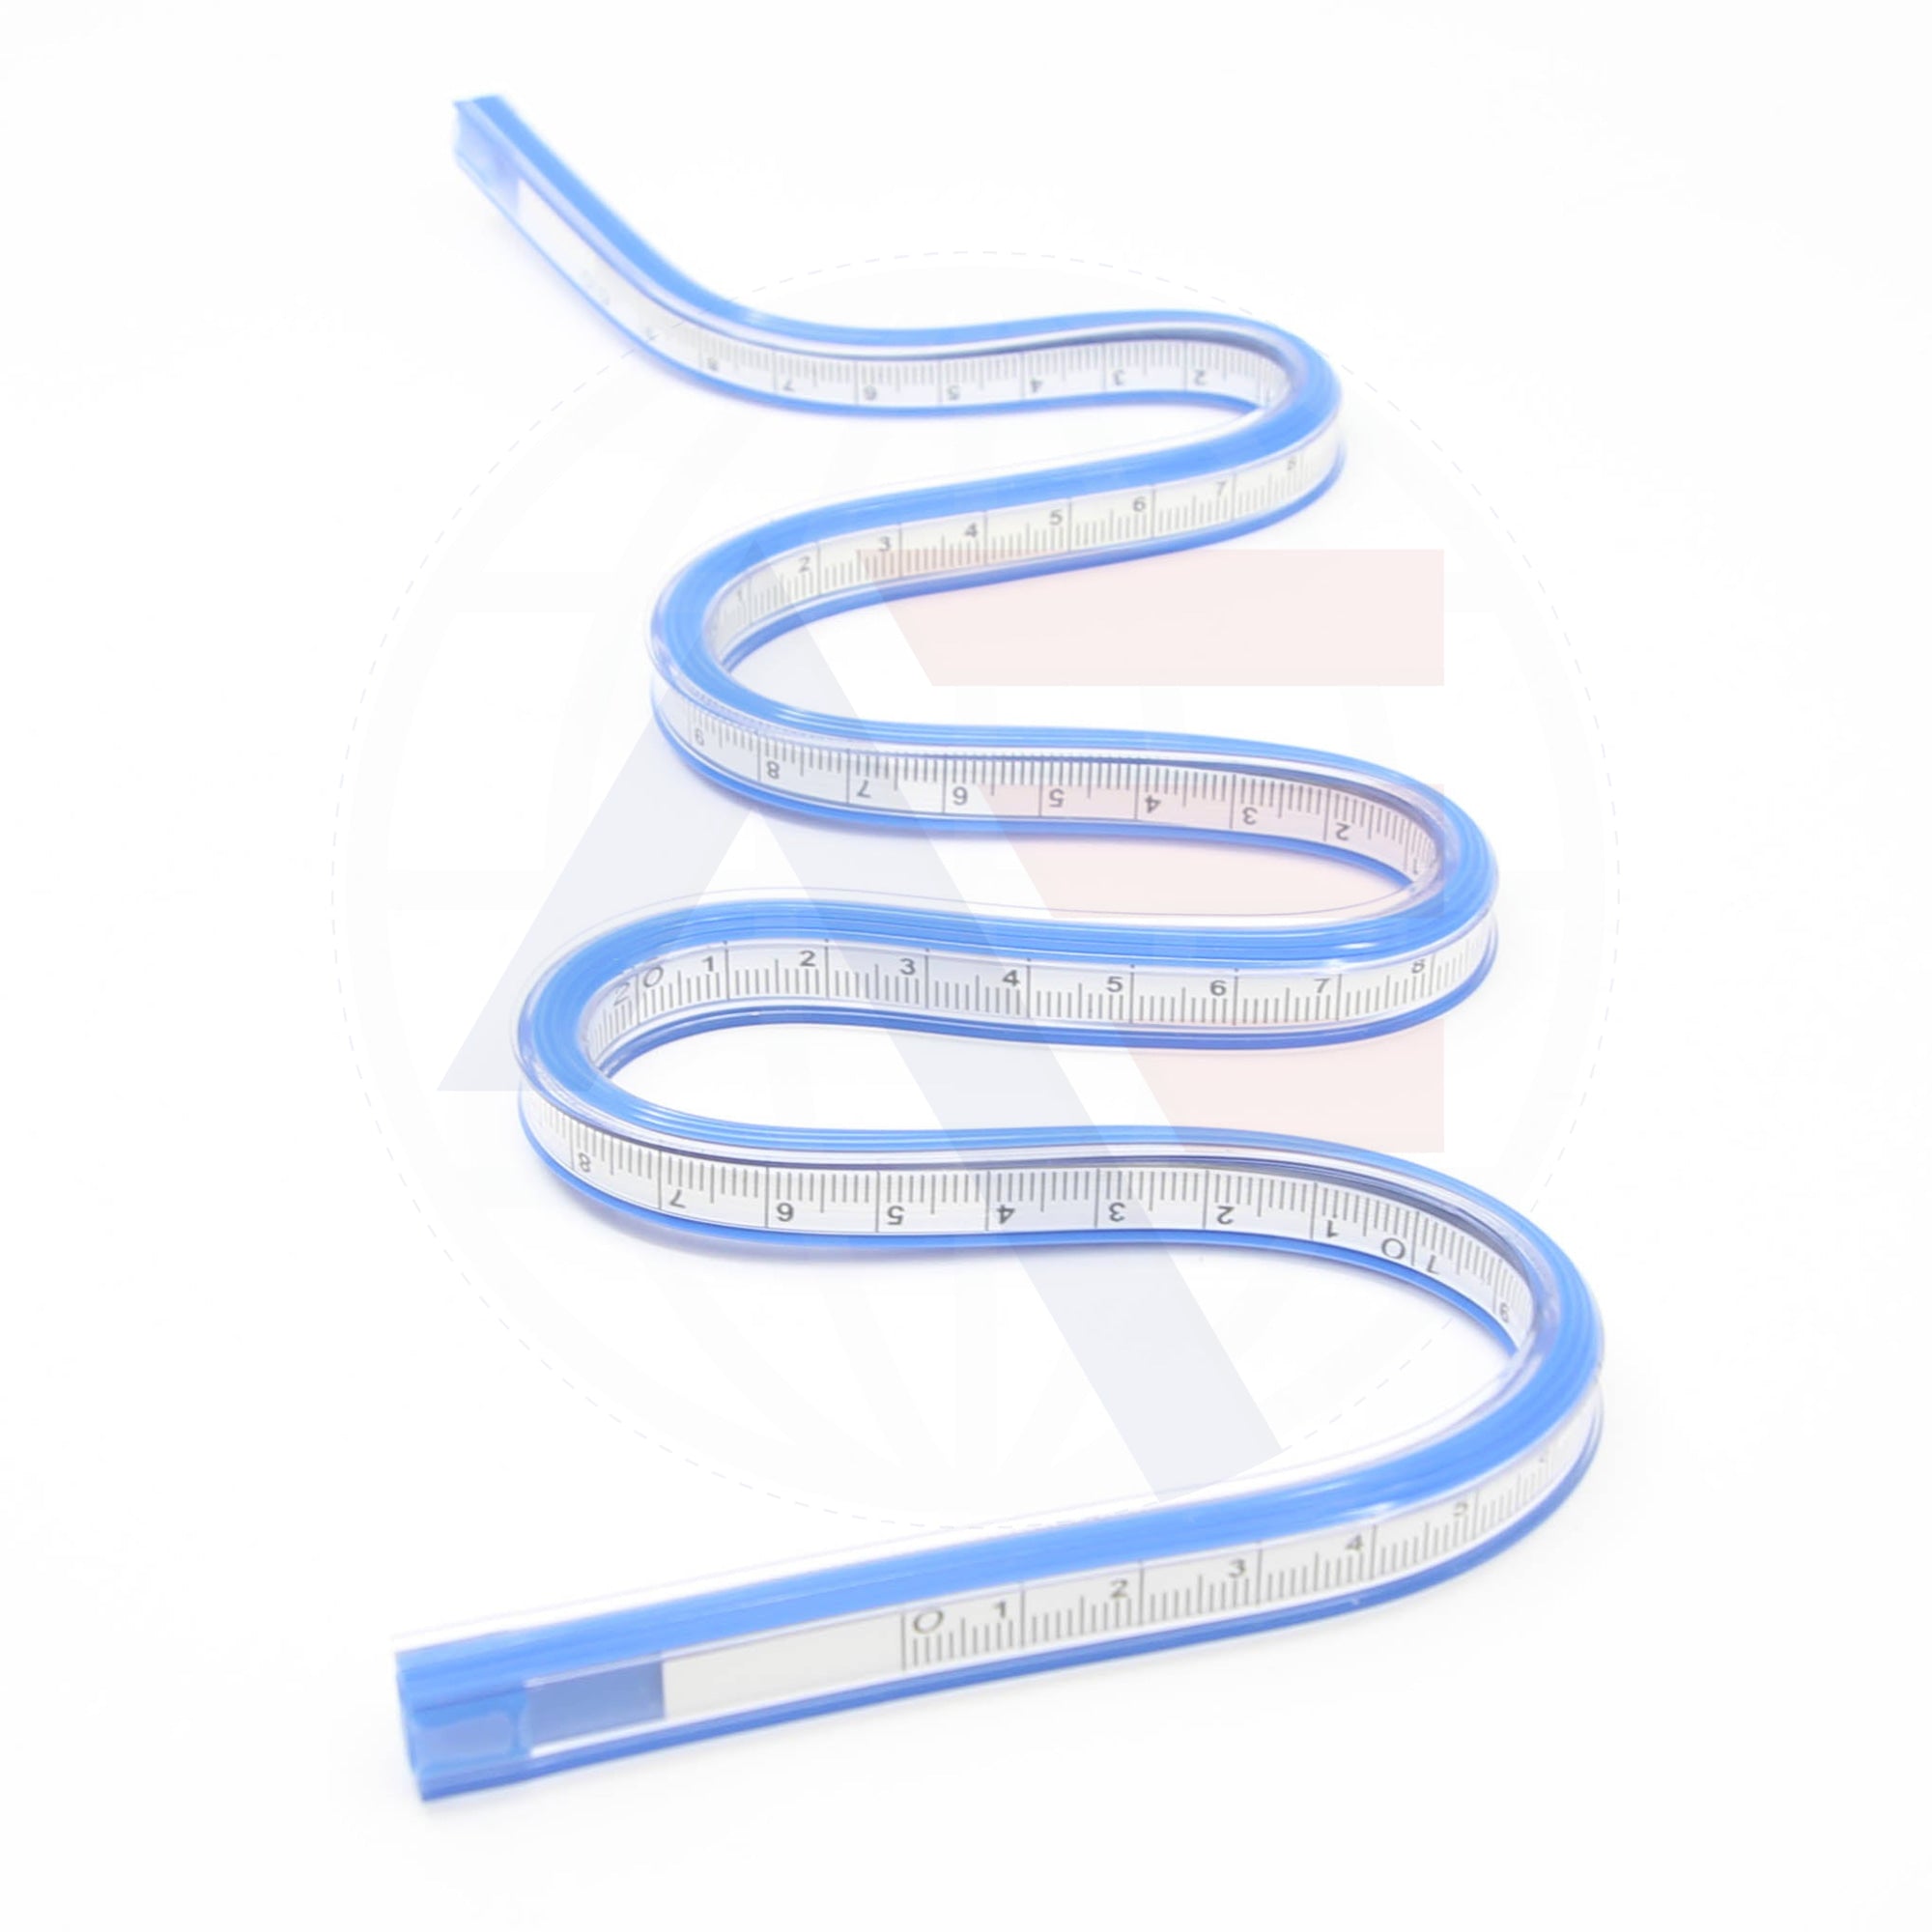 Df060 60Cm Vinyl Flexible Curve Ruler